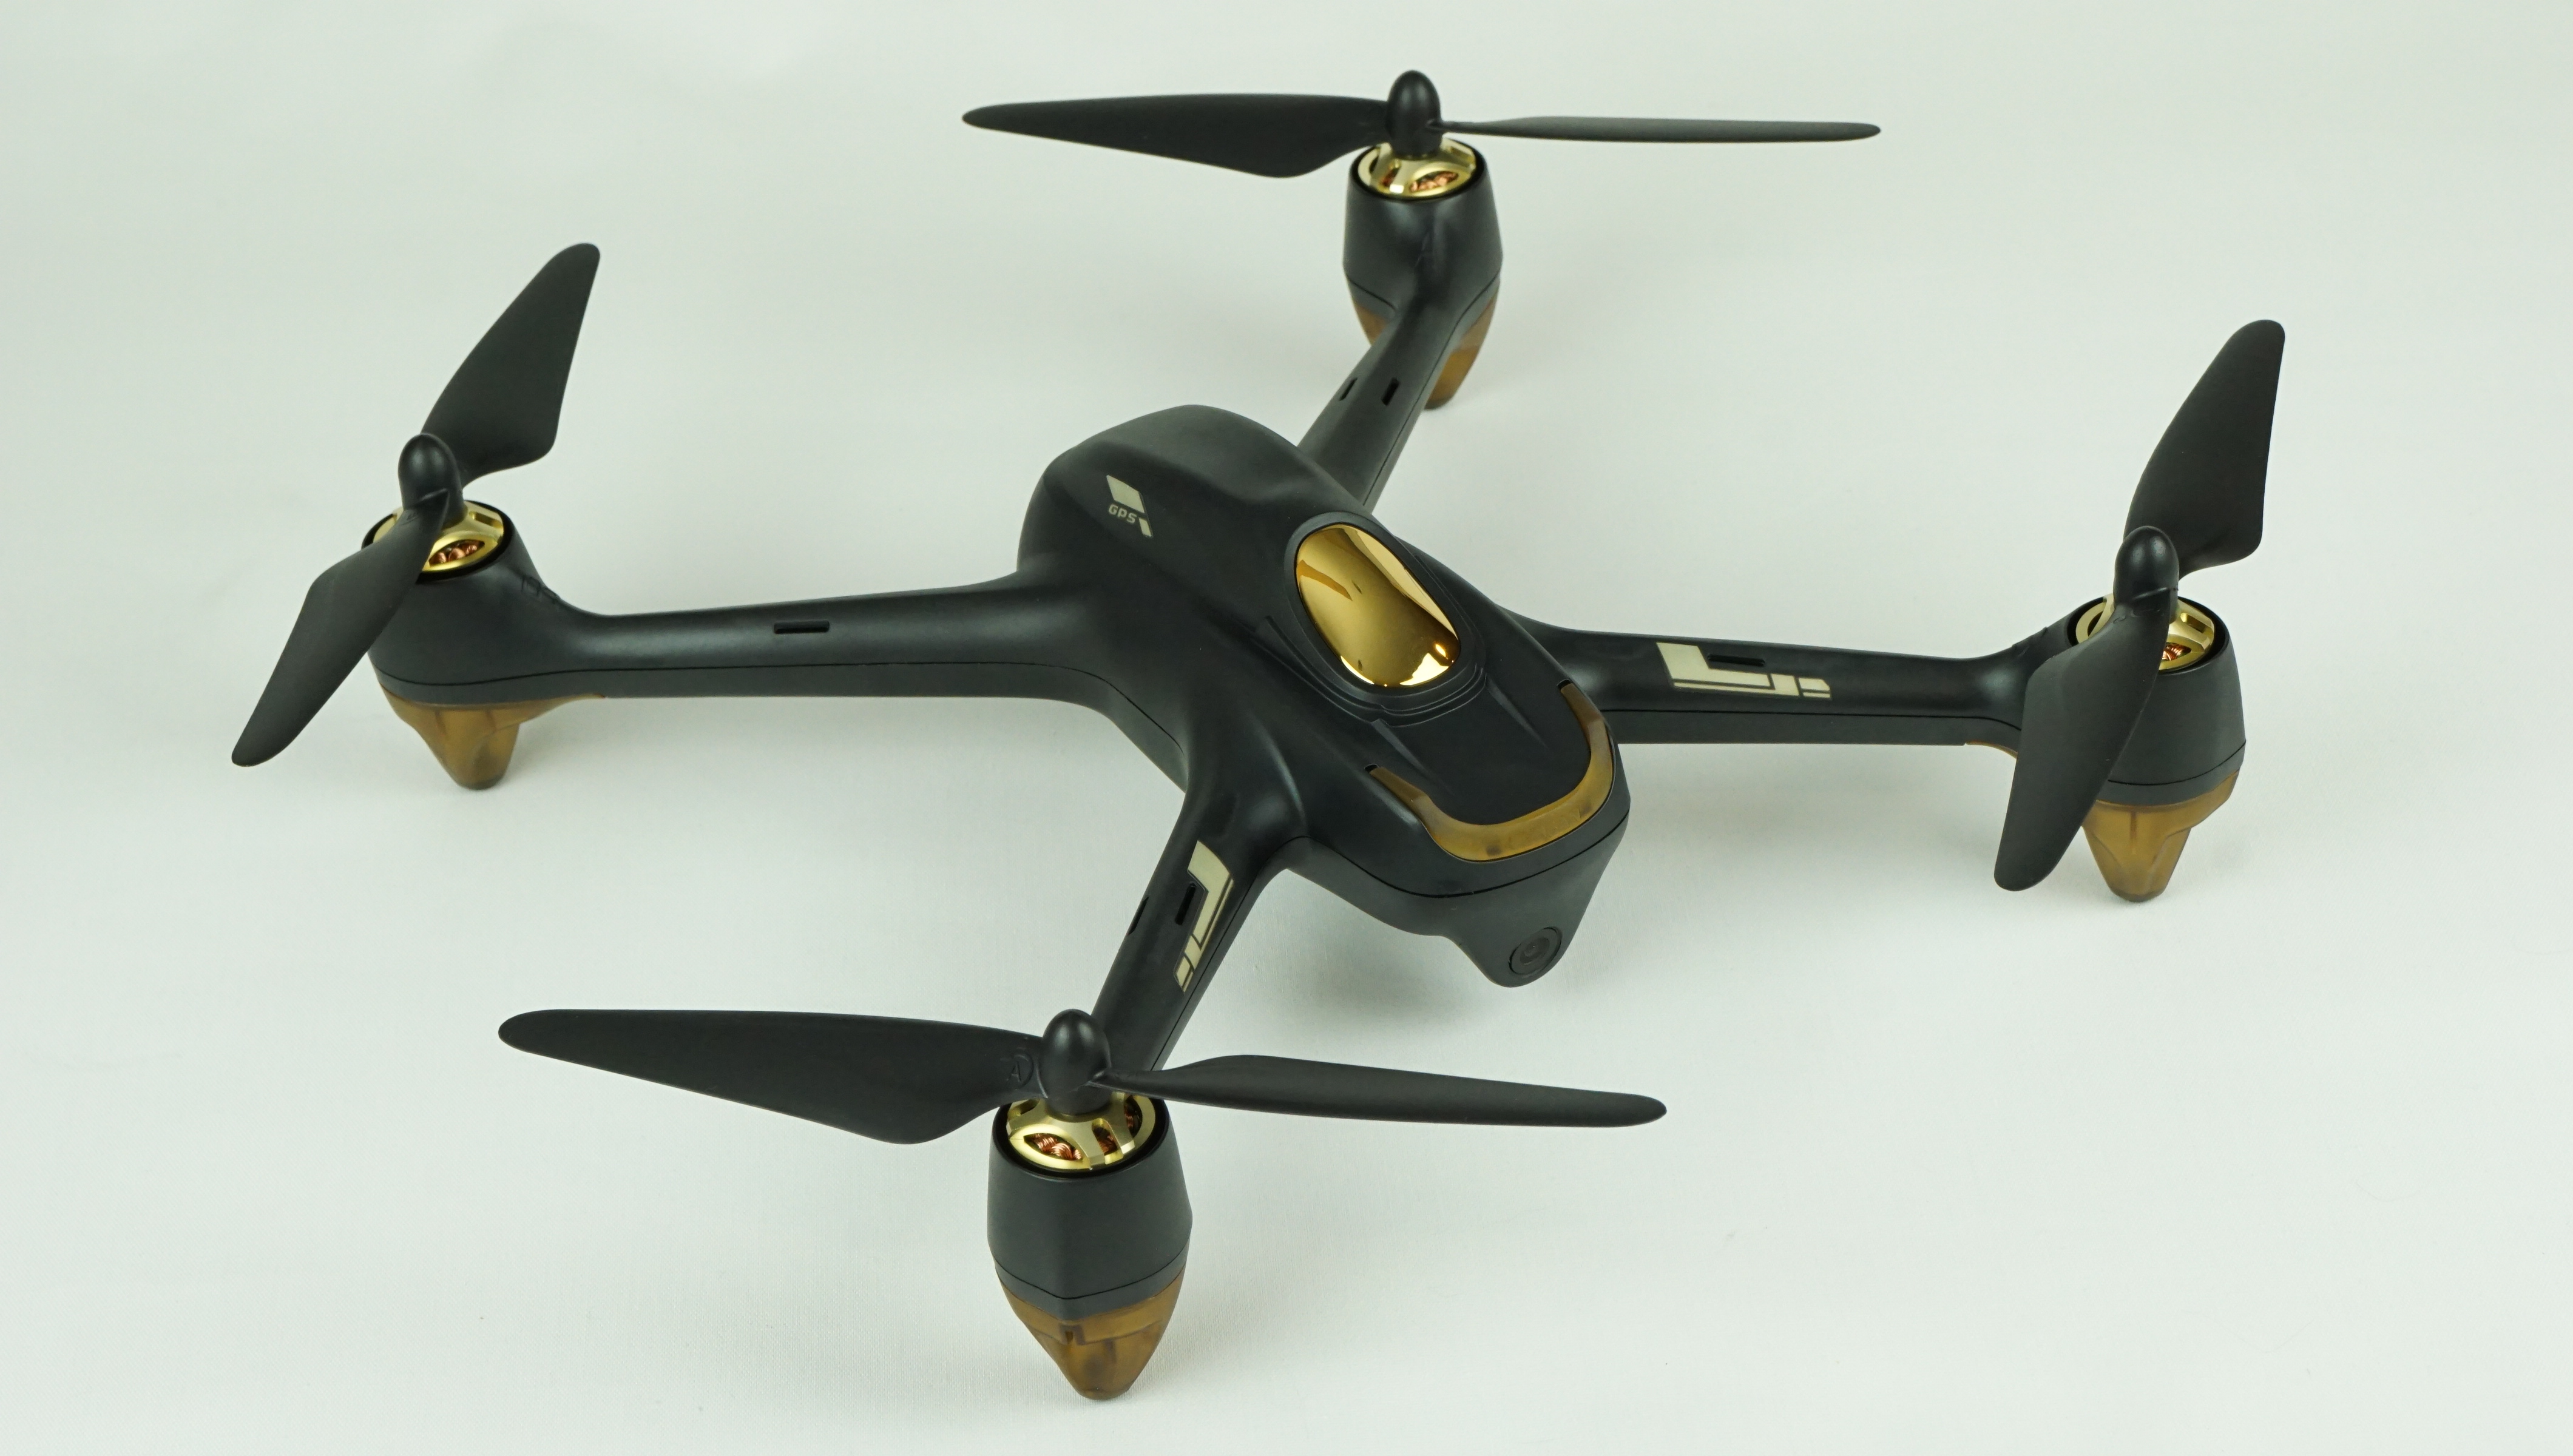 gradvist last Army Hubsan H501S: Is It the Best sub-$200 GPS Drone? - Half Chrome Drones